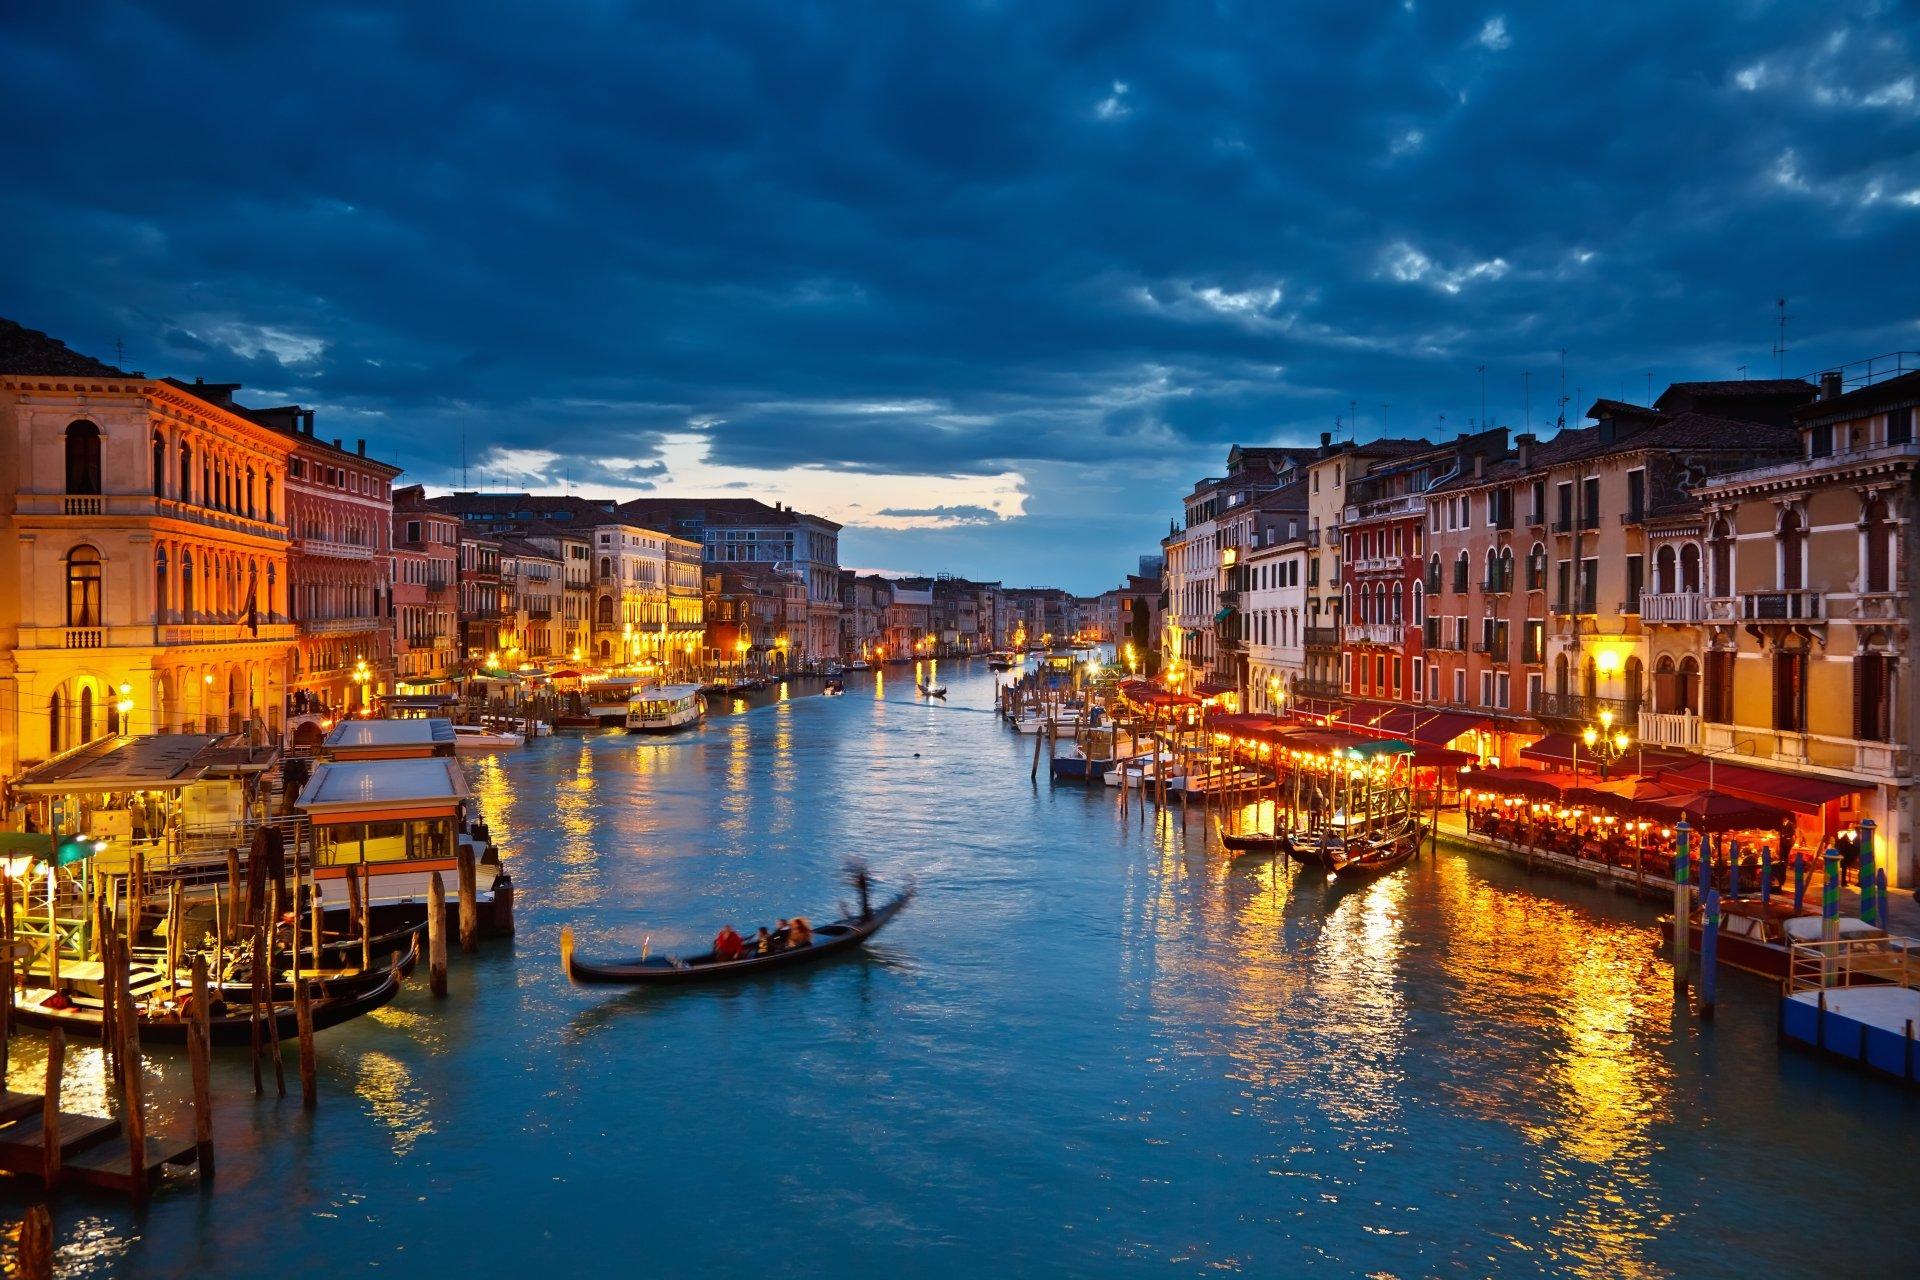 Nice Venice City Photo, Venice City Guide